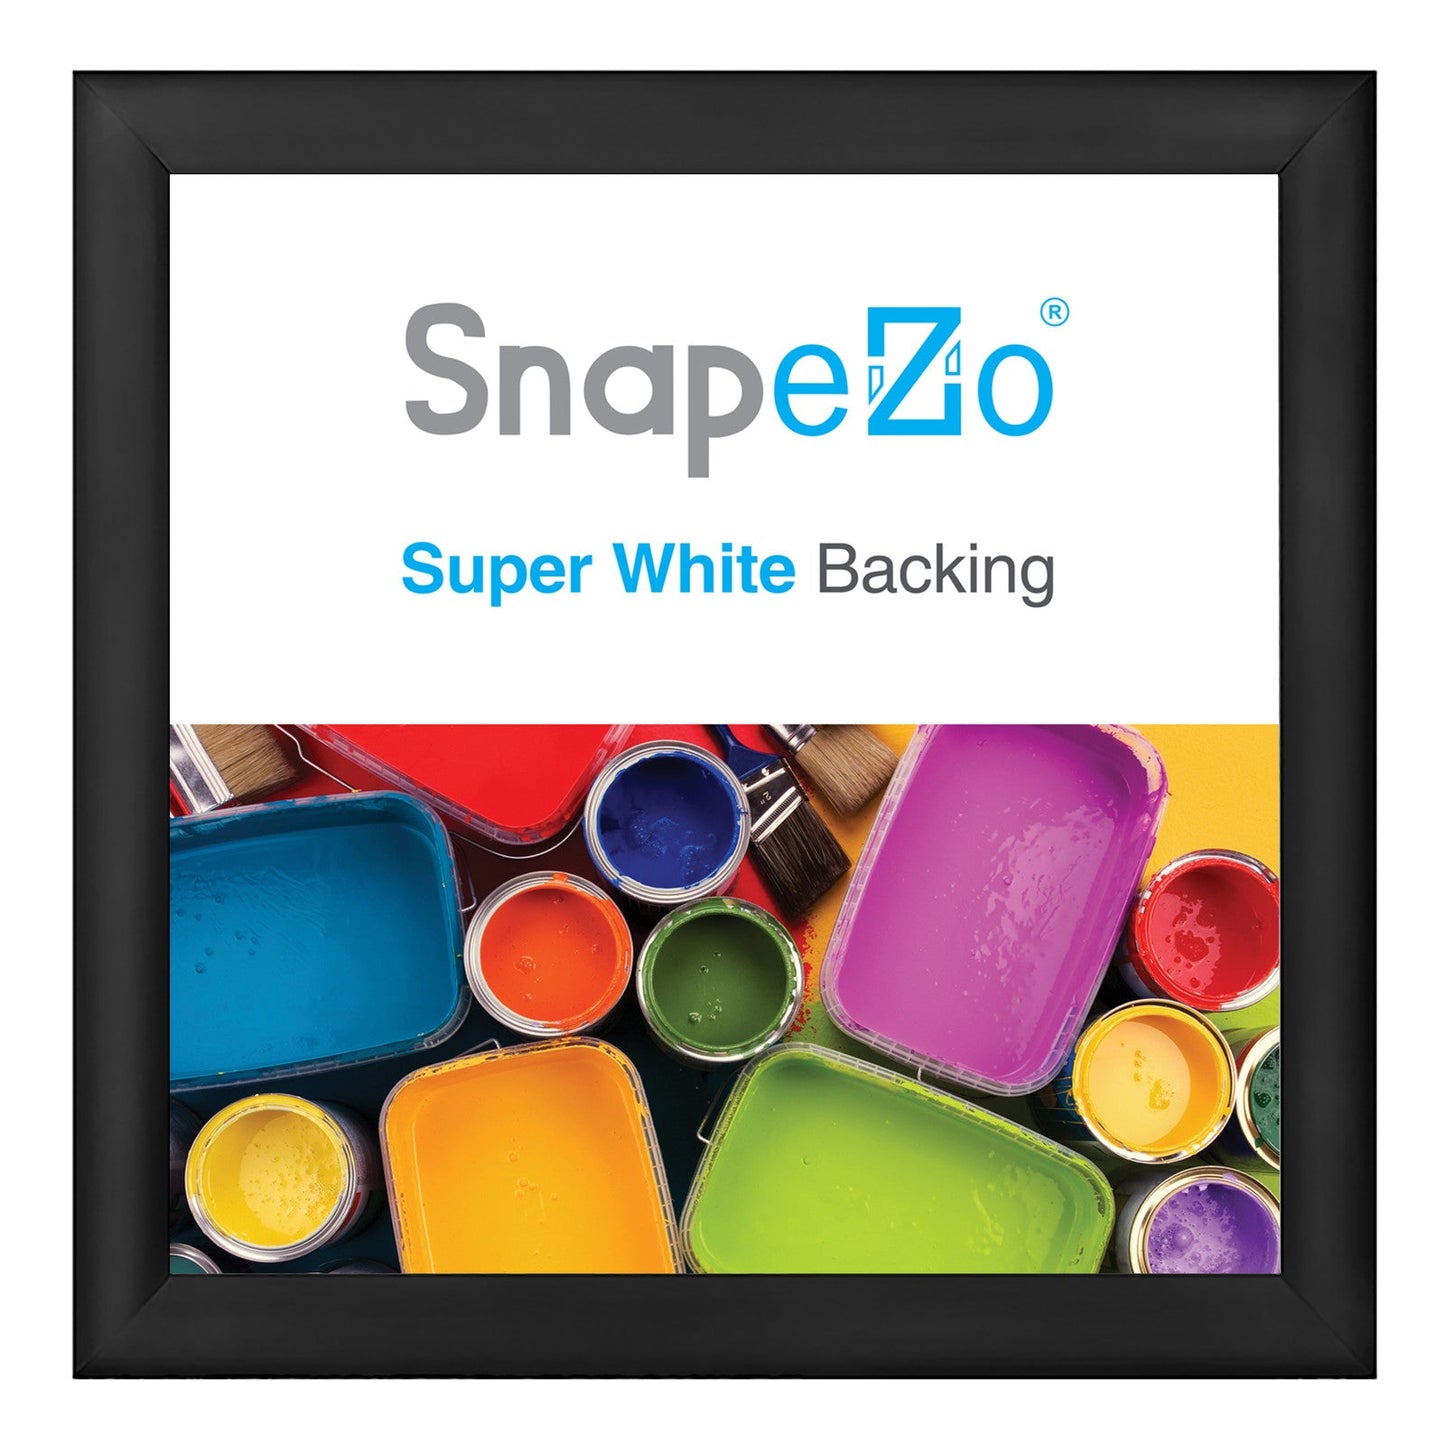 30x30 Black SnapeZo® Snap Frame - 1.2" Profile